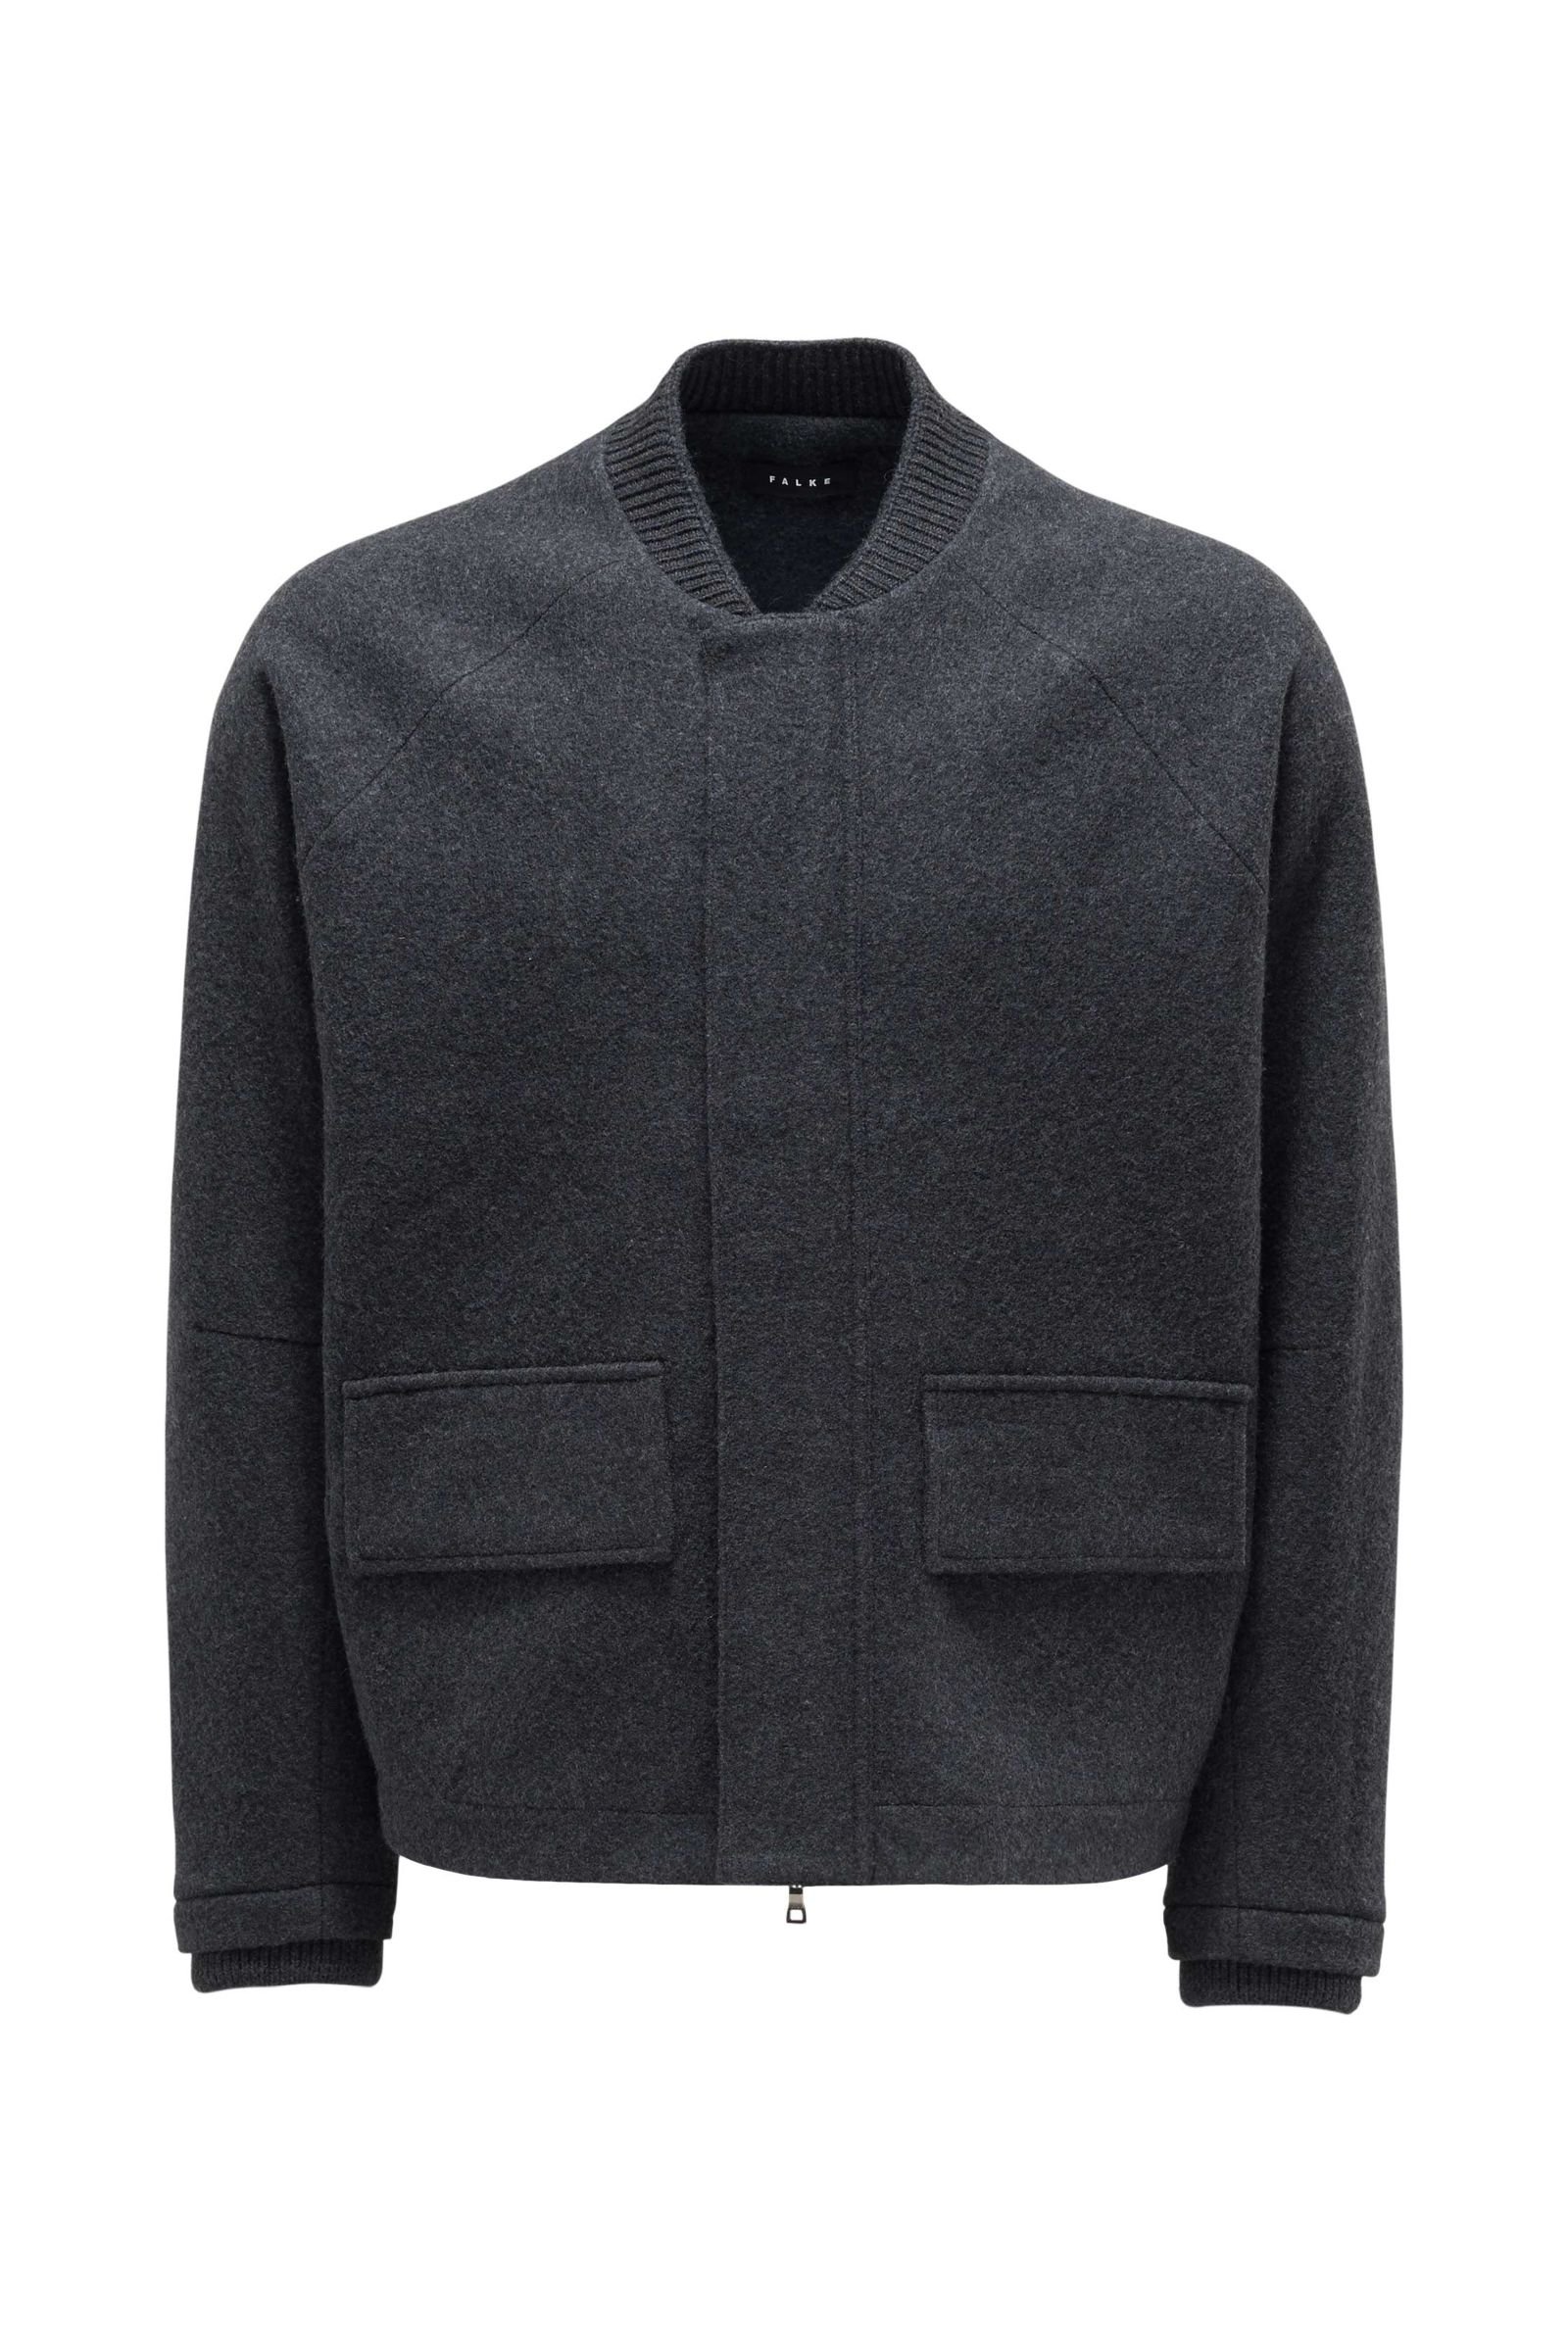 Wool bomber jacket dark grey